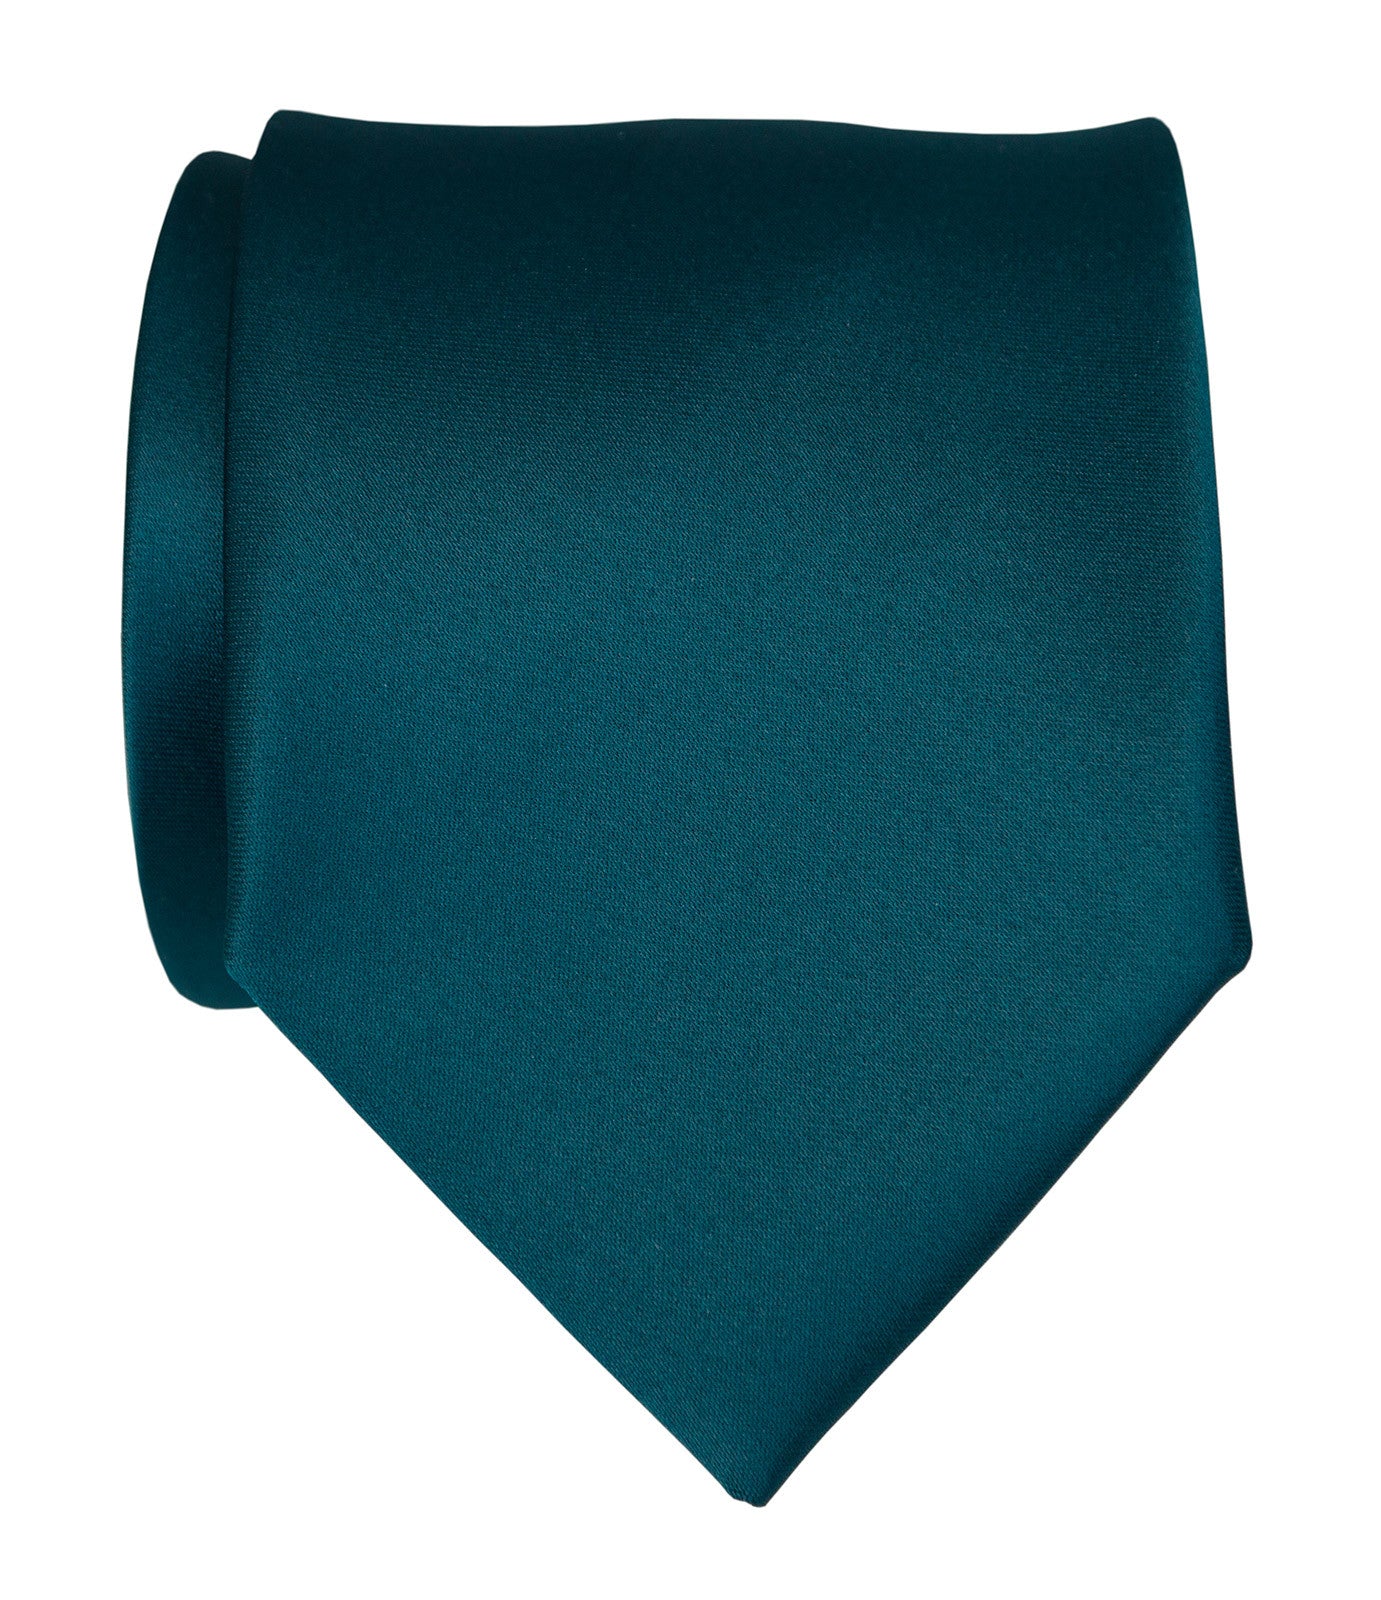 Dark Teal Necktie Dark Blue Solid Color Satin Finish Tie No Print